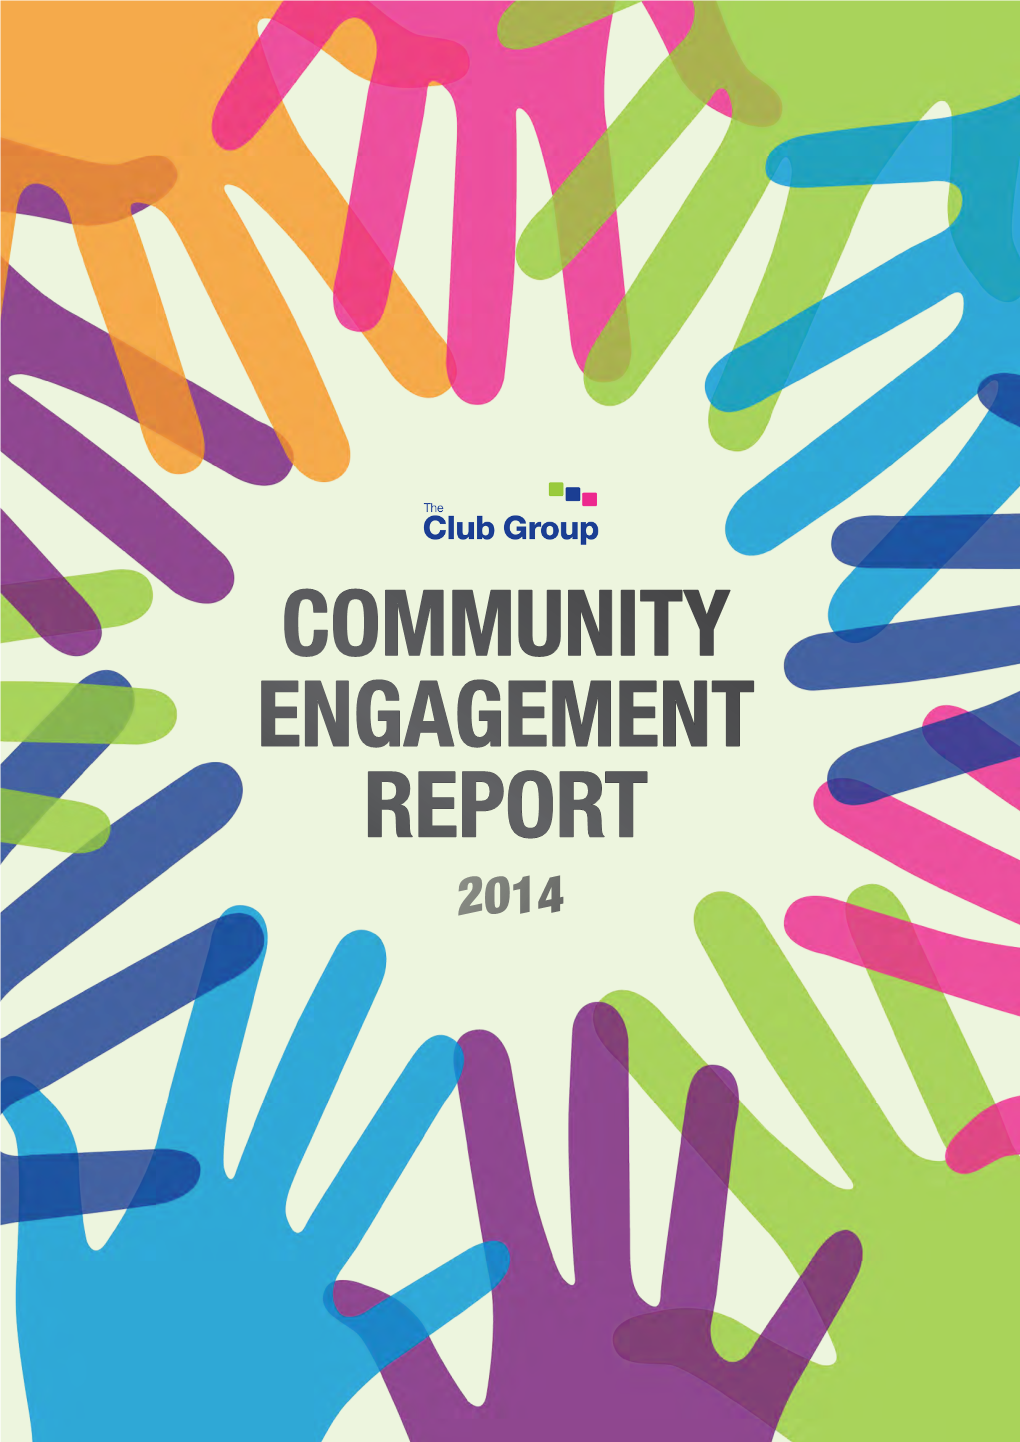 2014 Community Engagement Report